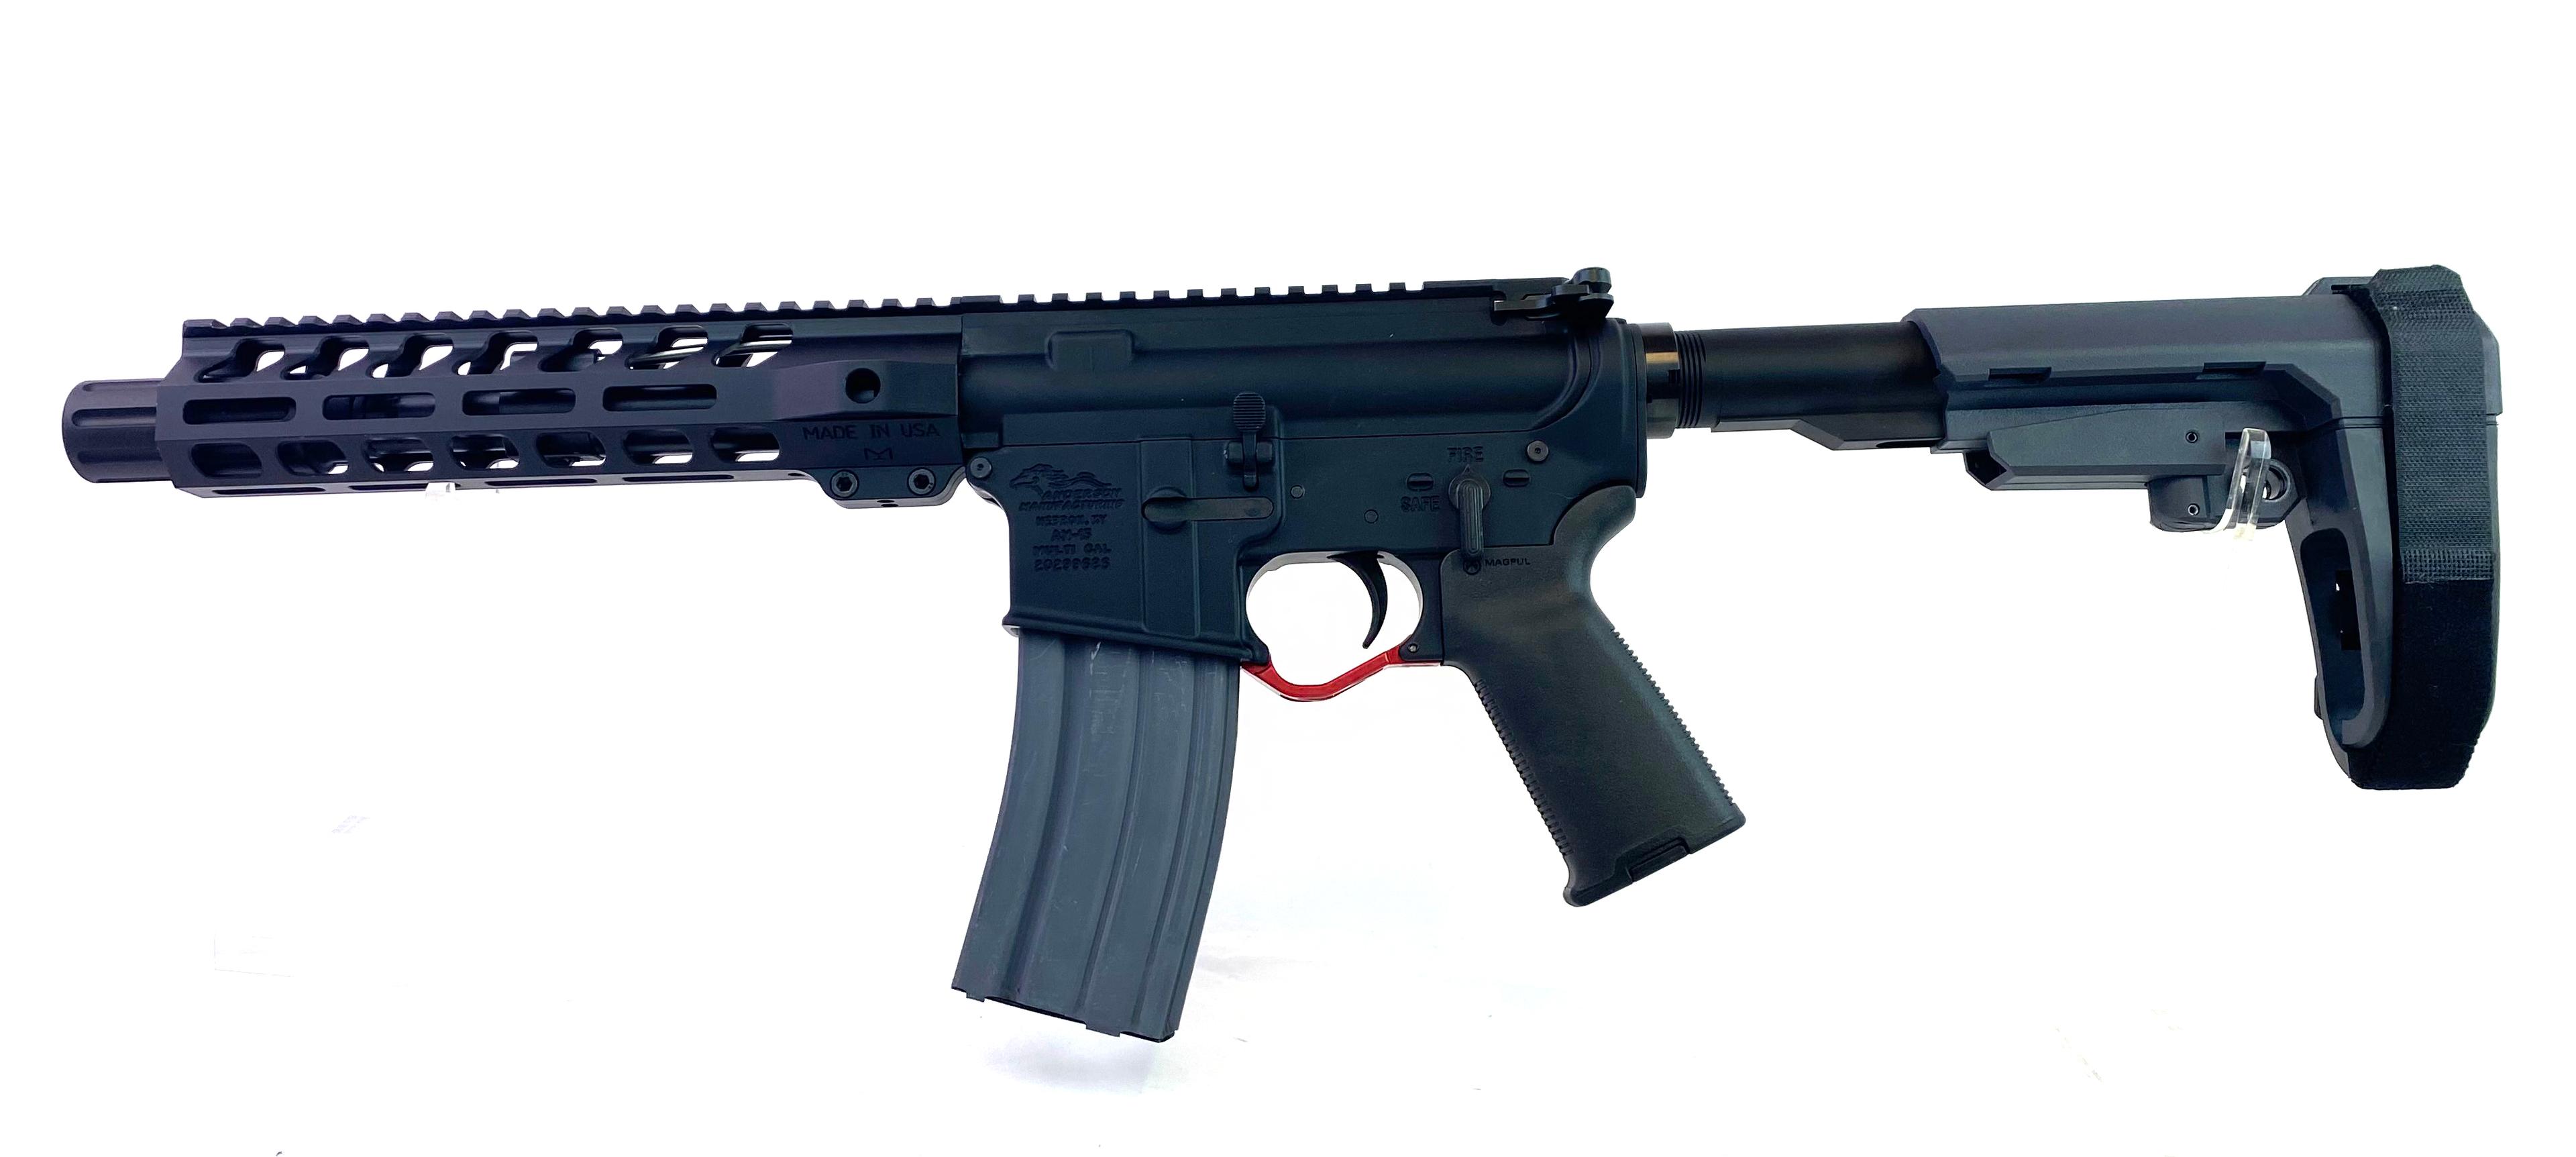 New "Punisher" Anderson Manf. Inc. 300 AAC Blackout Semi-Automatic AR 10.5" Pistol w/ Pistol Brace